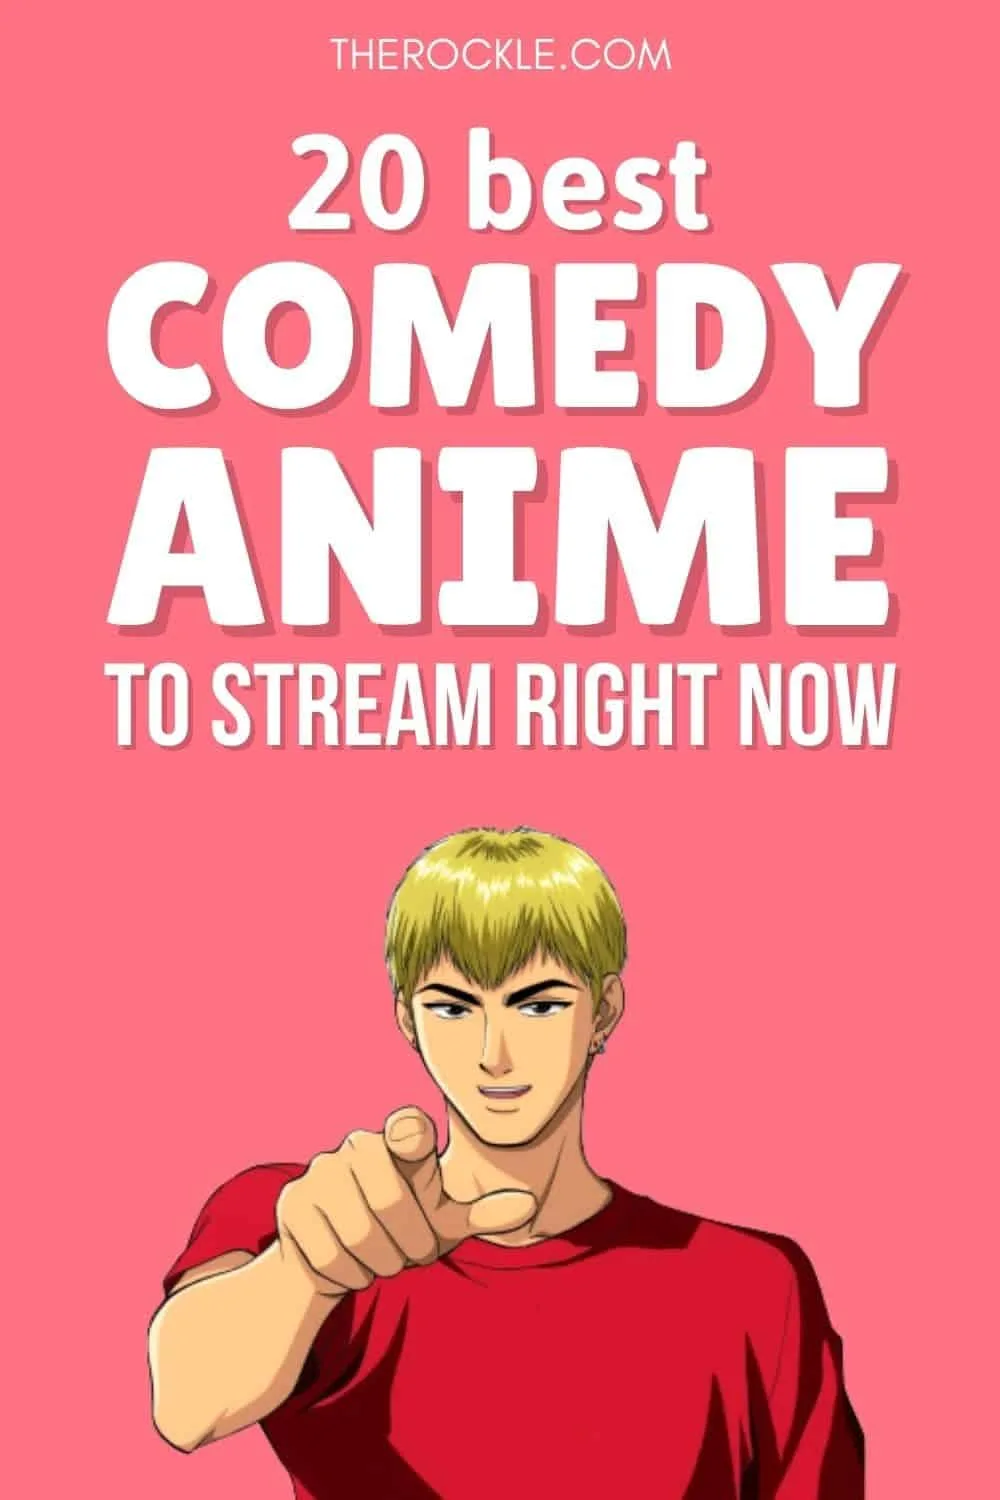 Top 10 Best Comedy Anime | Nichijou, Best comedy anime, Comedy anime